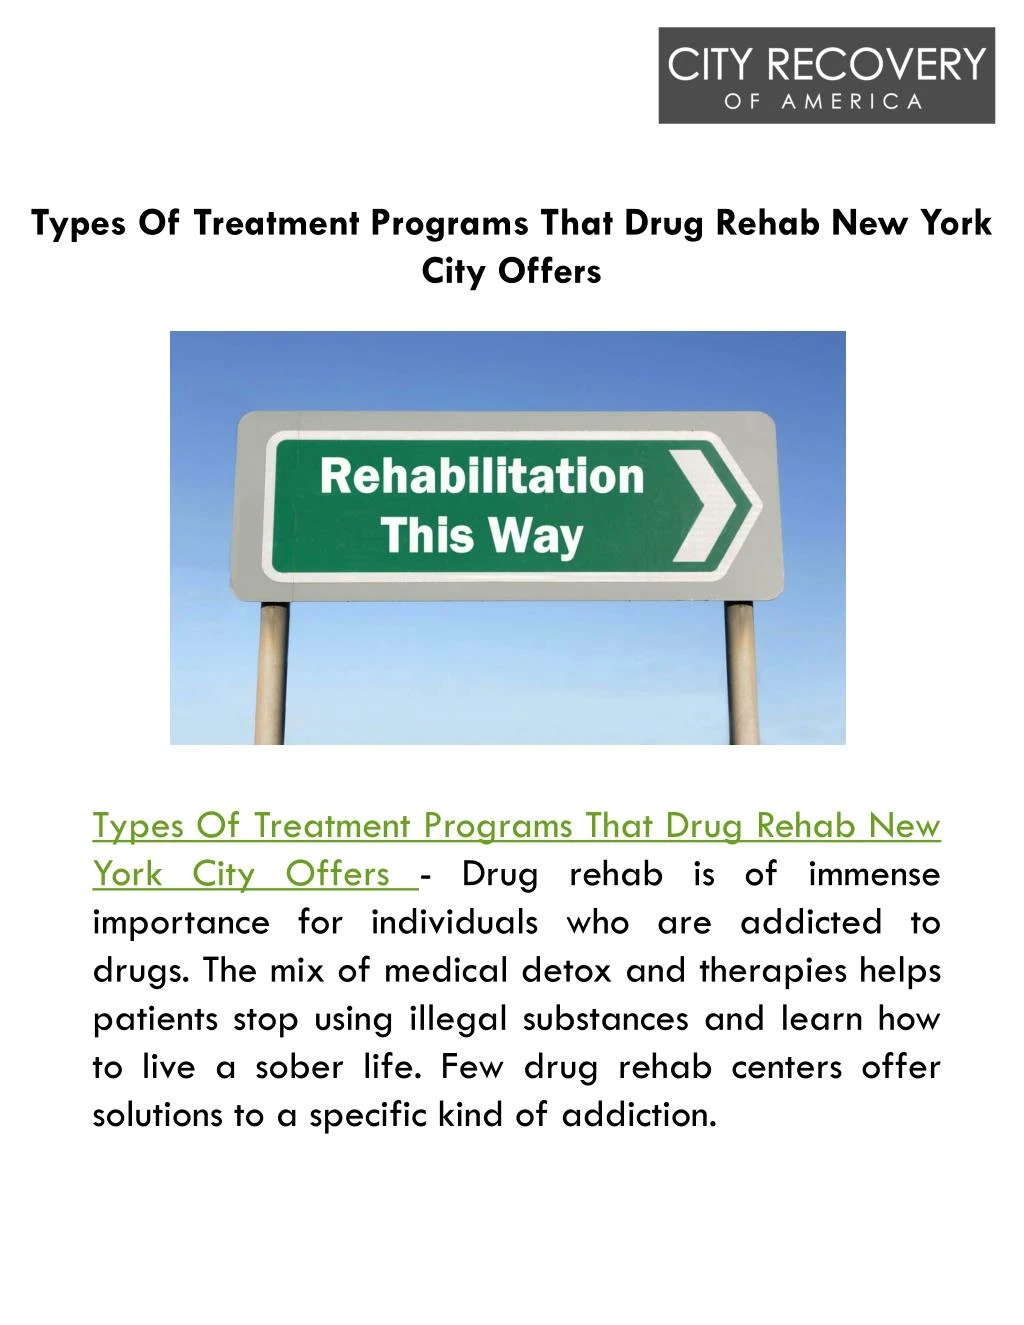 types of treatment programs that drug rehab